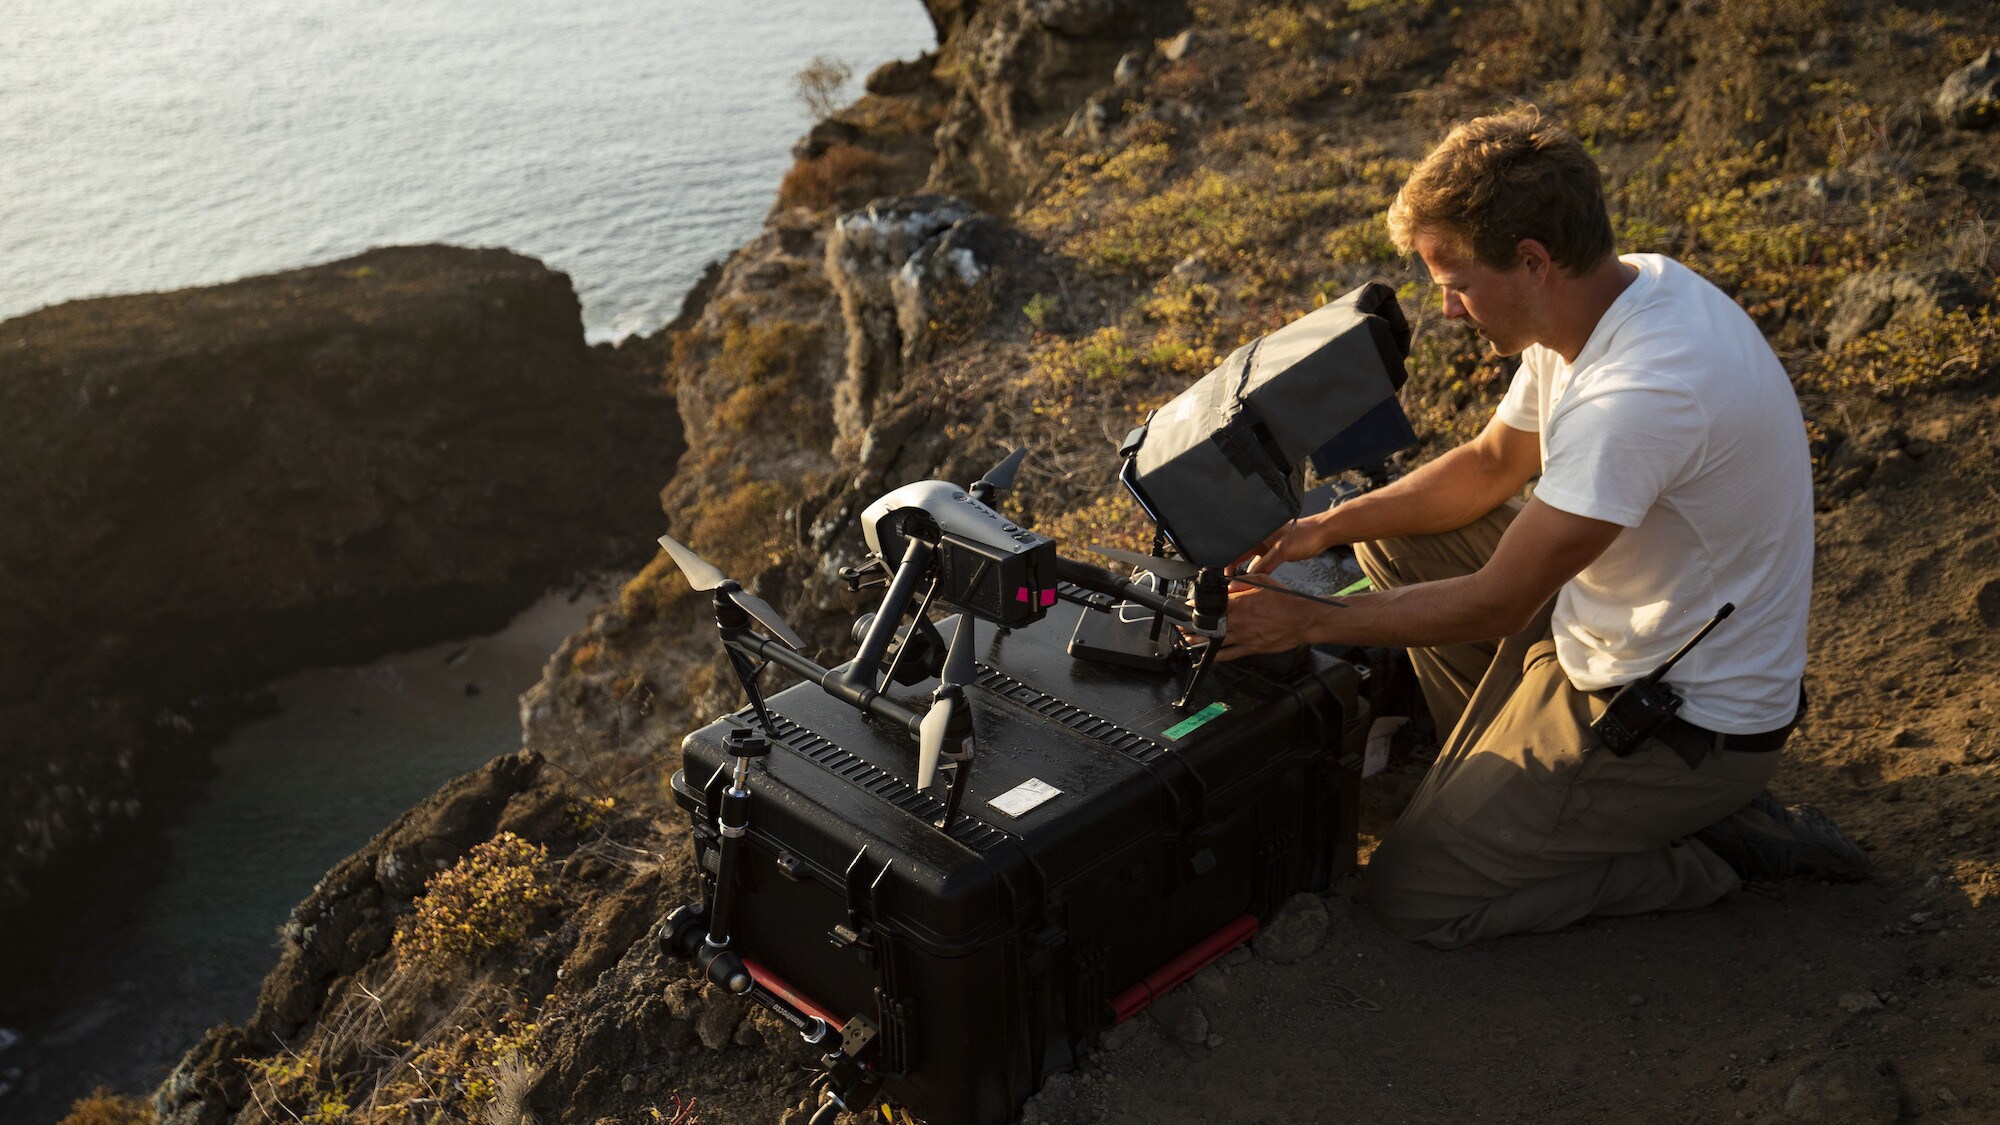 Bertie Gregory views drone footage. (National Geographic for Disney+/Rakel Hansen)